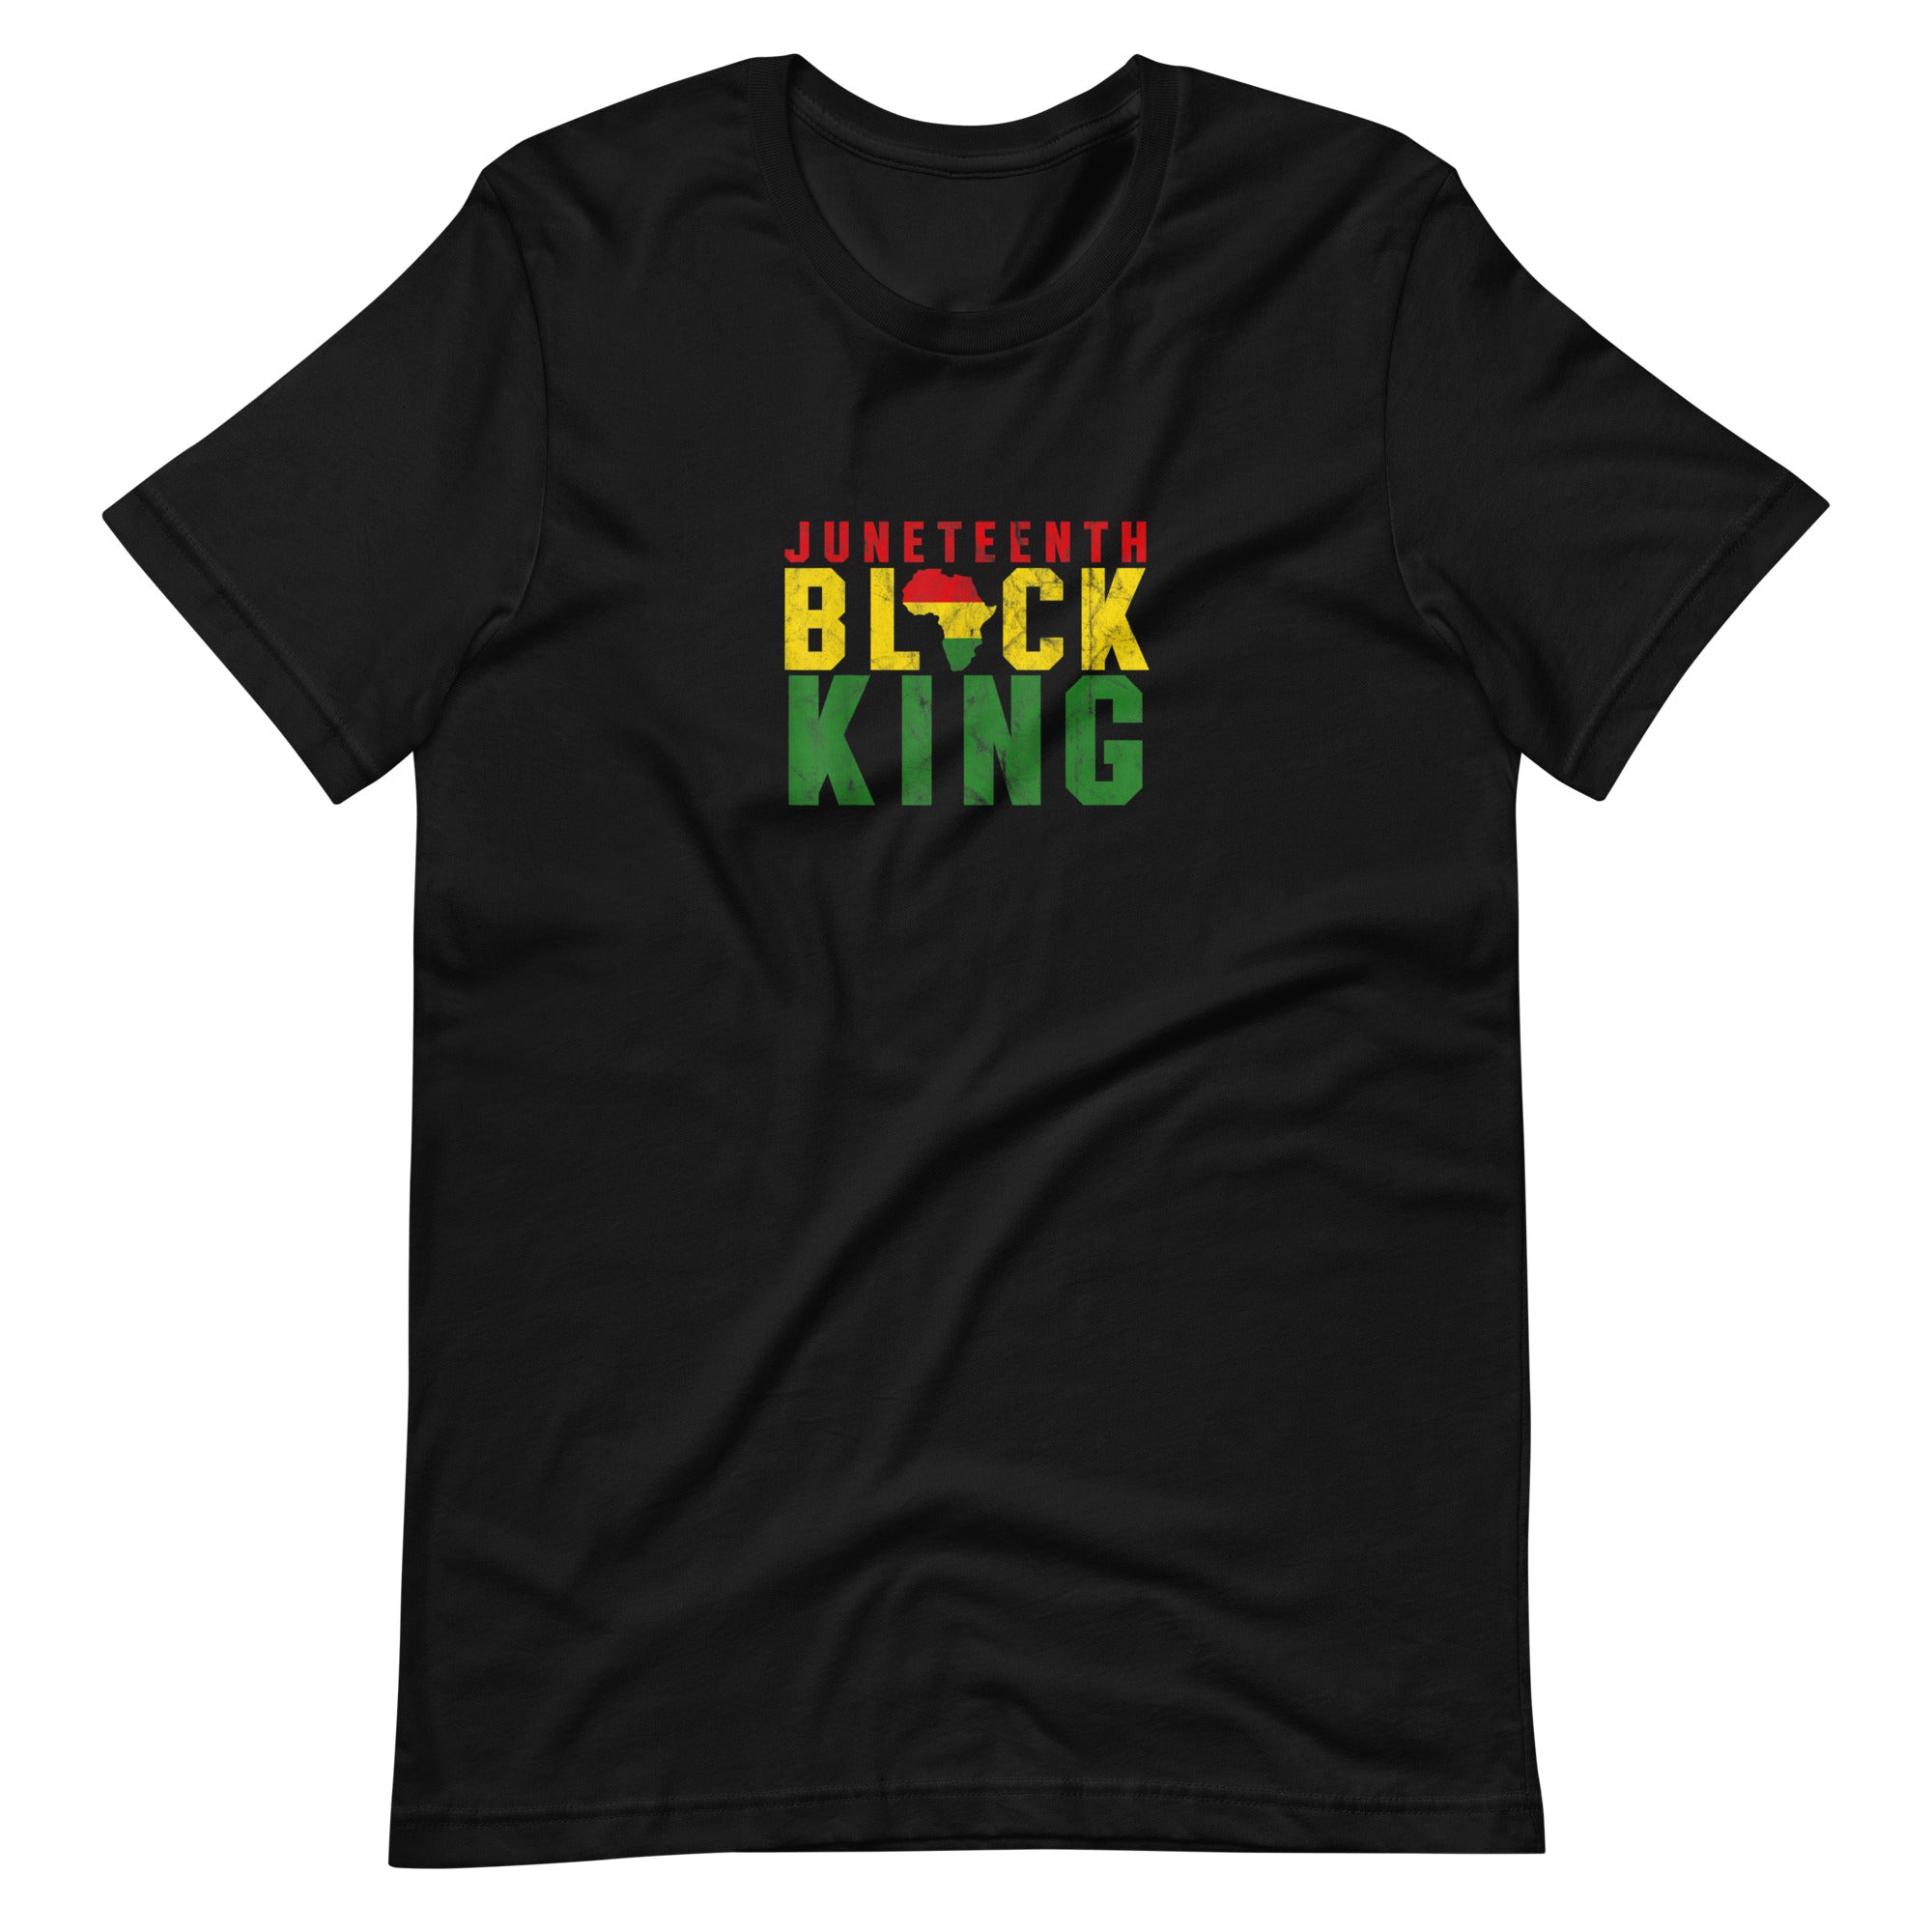 "Black King" Unisex t-shirt